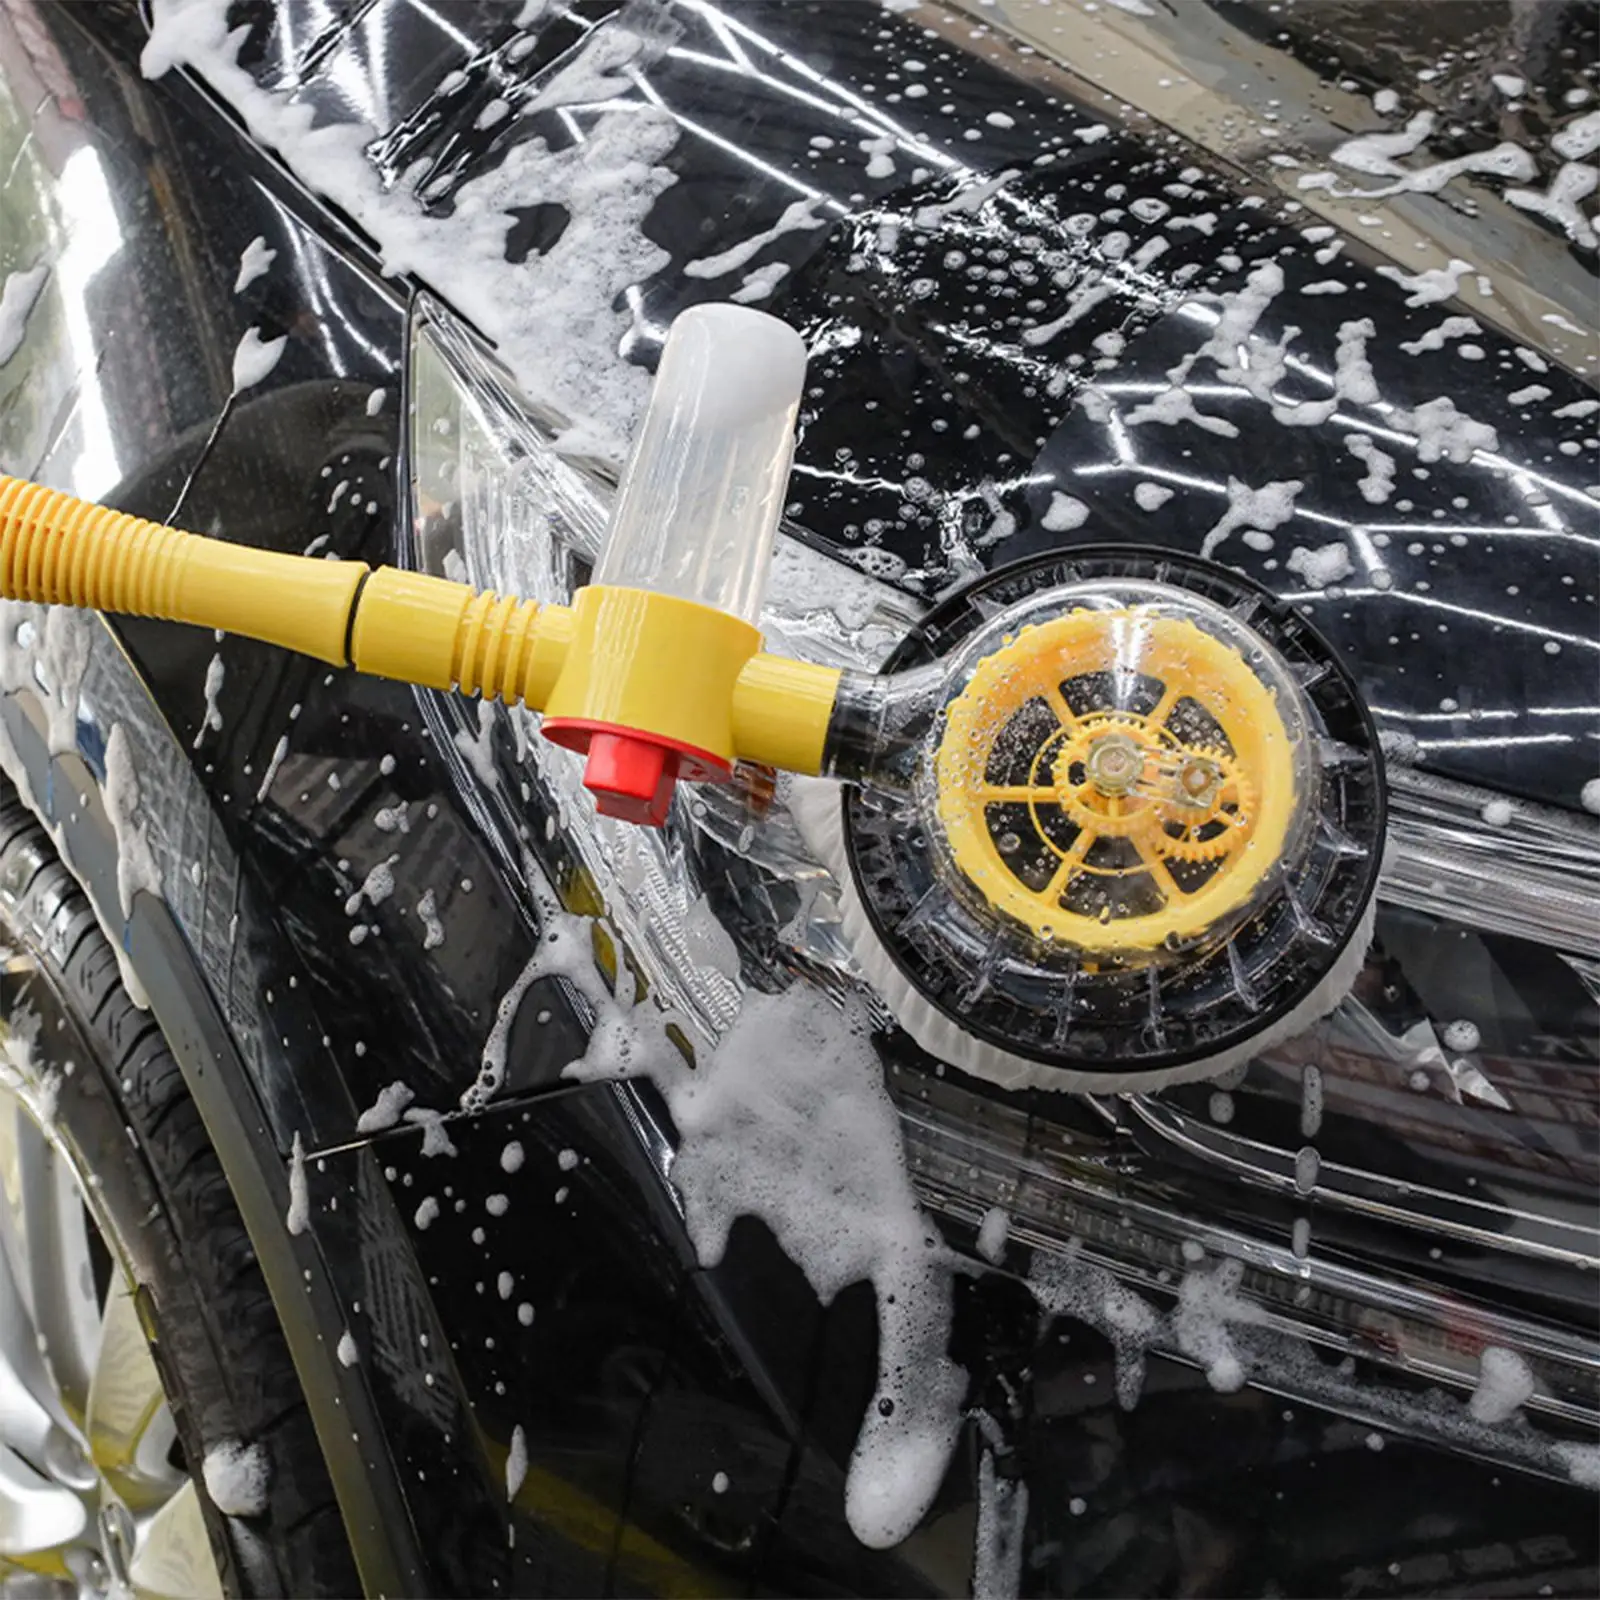 Car Rotary Wash Brush Kit Microfiber 360 Degree Adjustable Scrubber Dip Wash